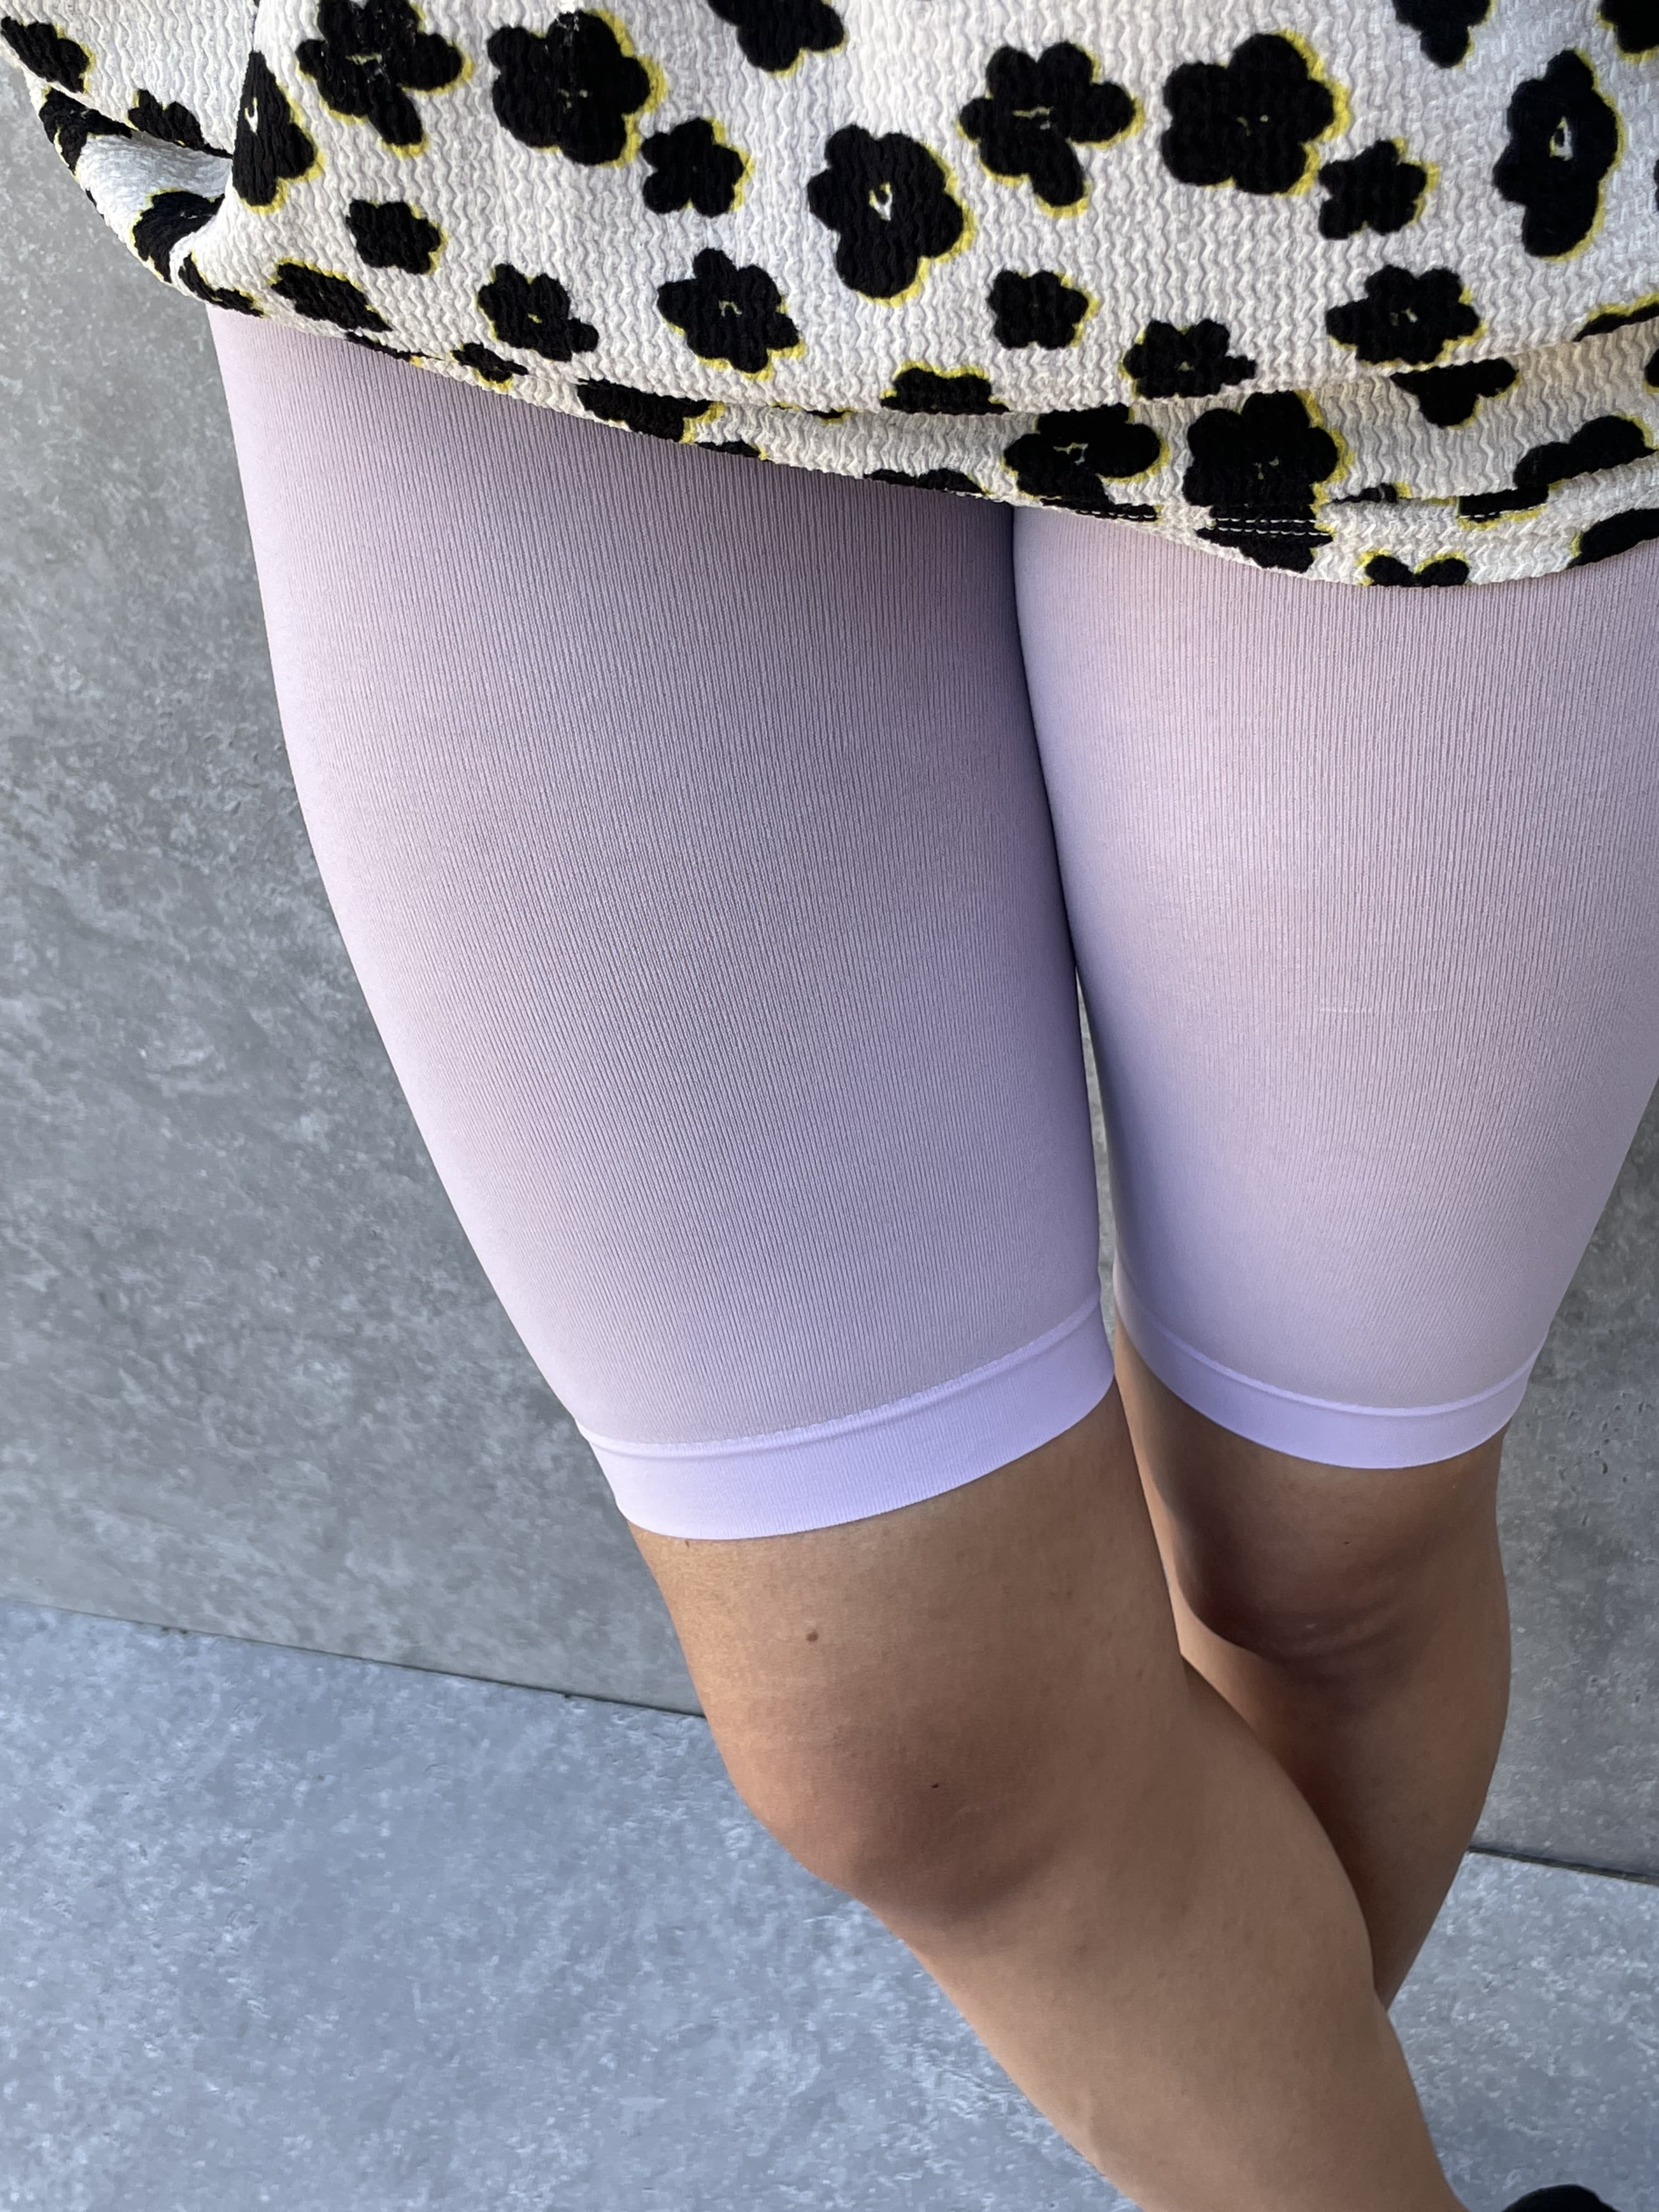 Anti Chafing Shorts Lightweight - Lilac